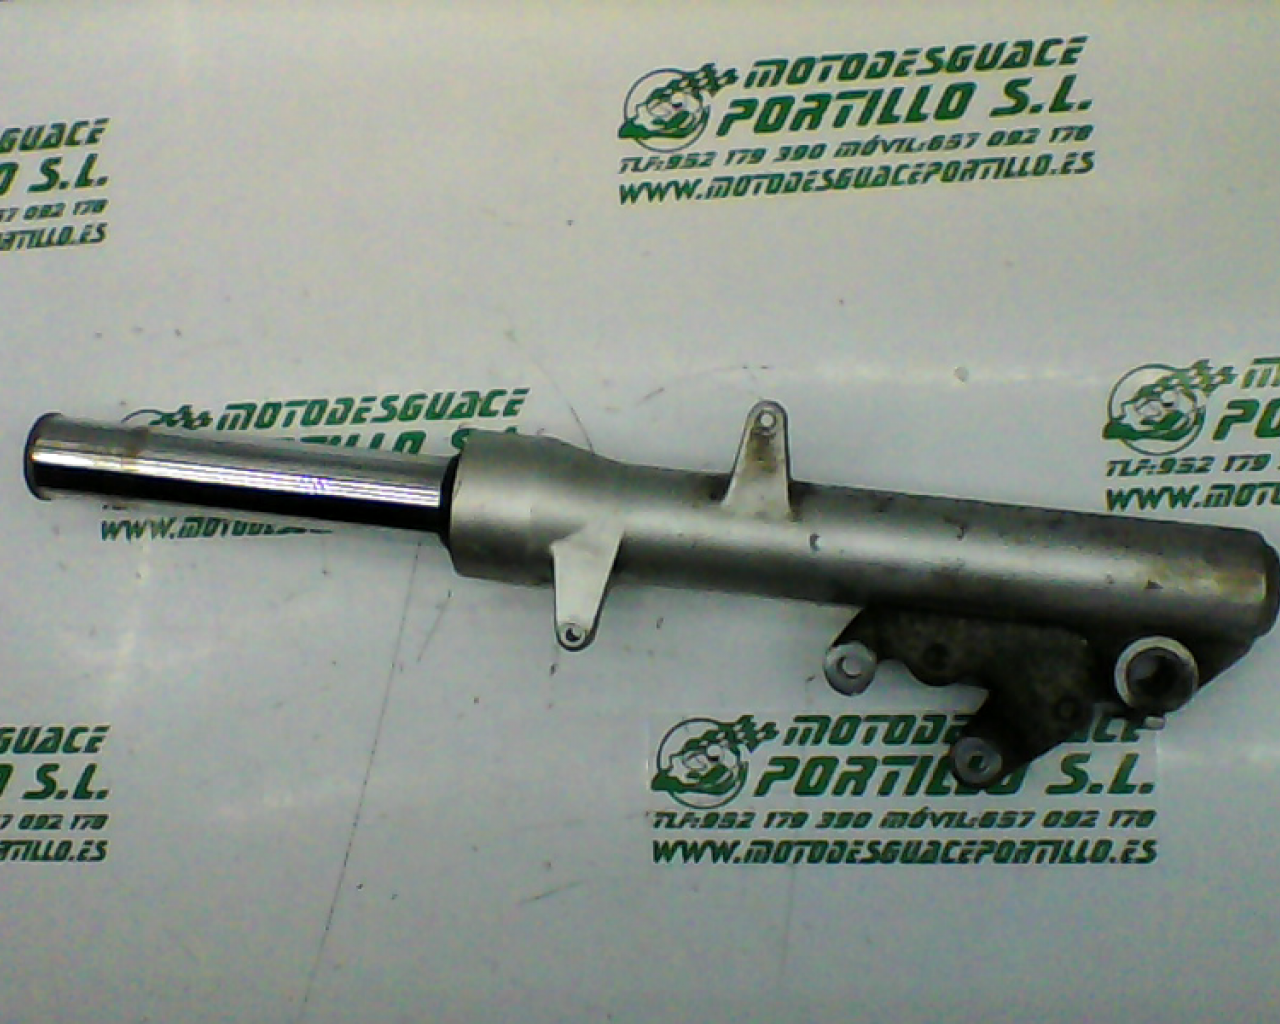 Barra horquilla izquierda Piaggio X8 200 (2004-2006)